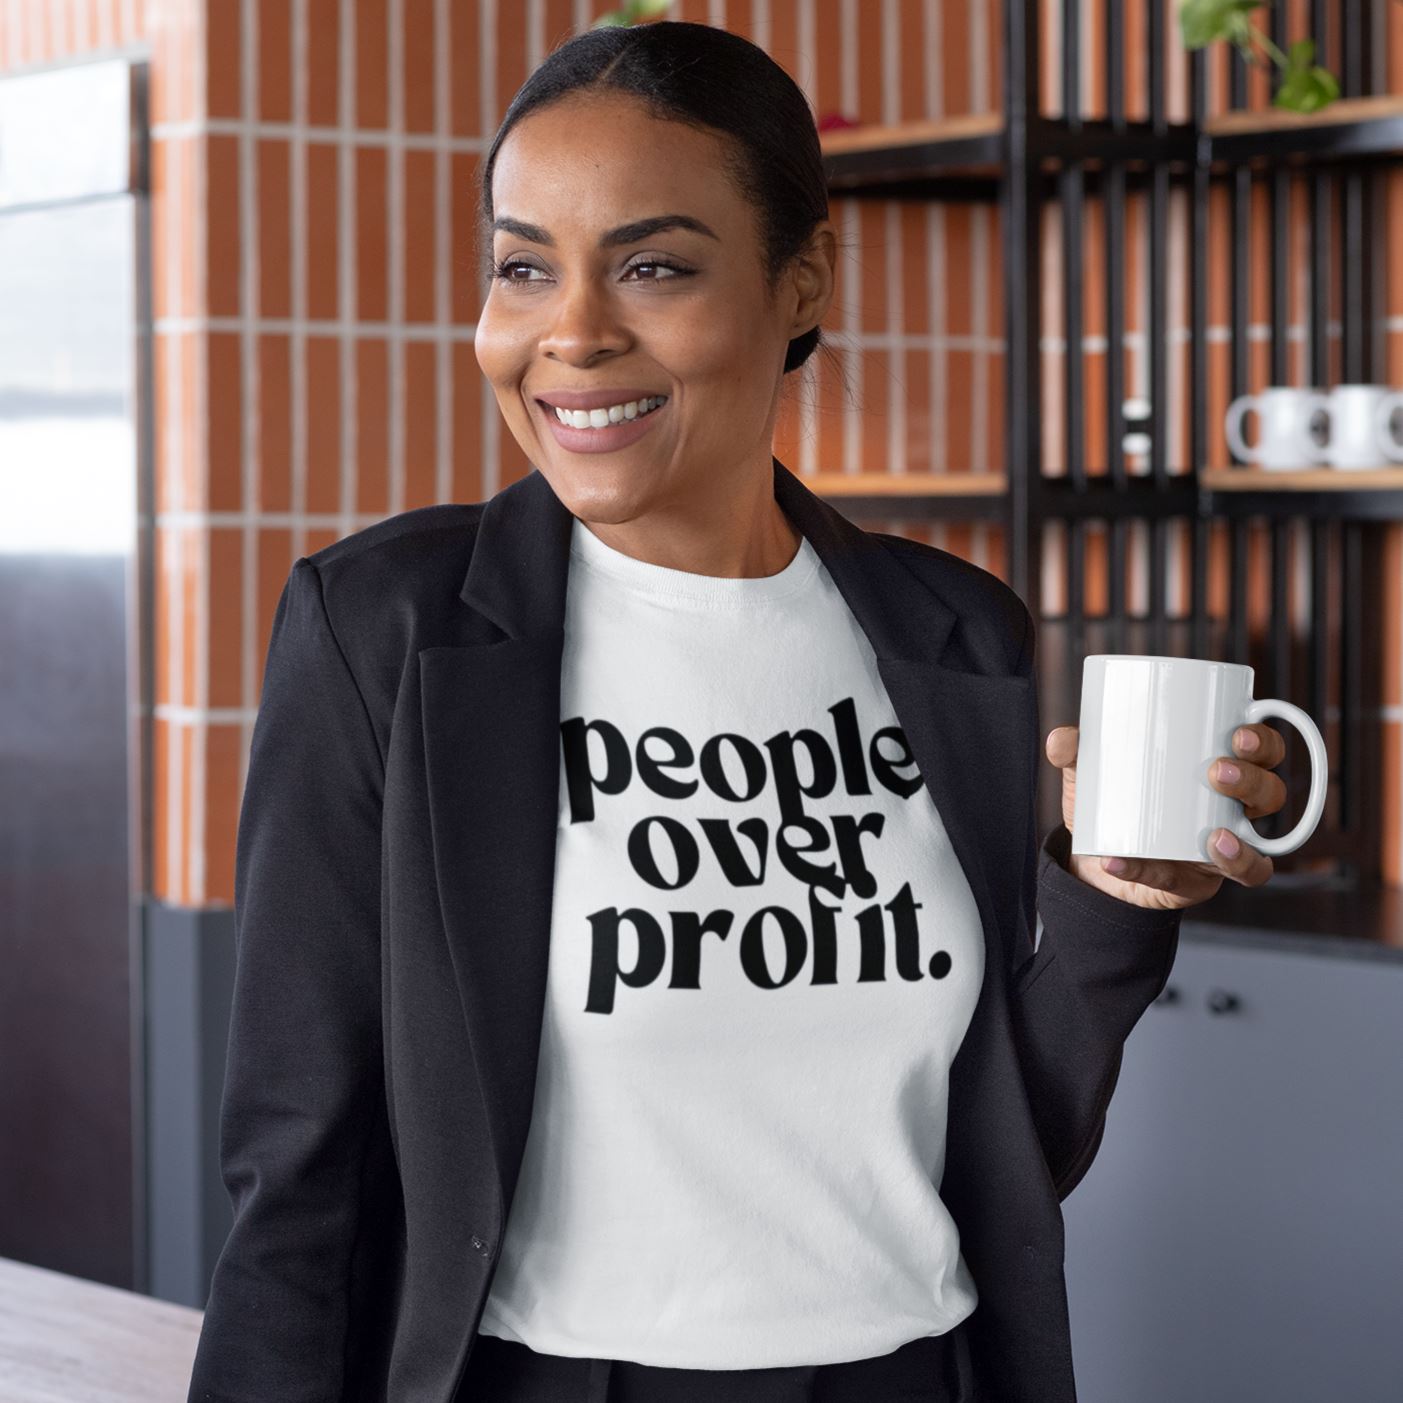 People Over Profit | Unisex T-shirt